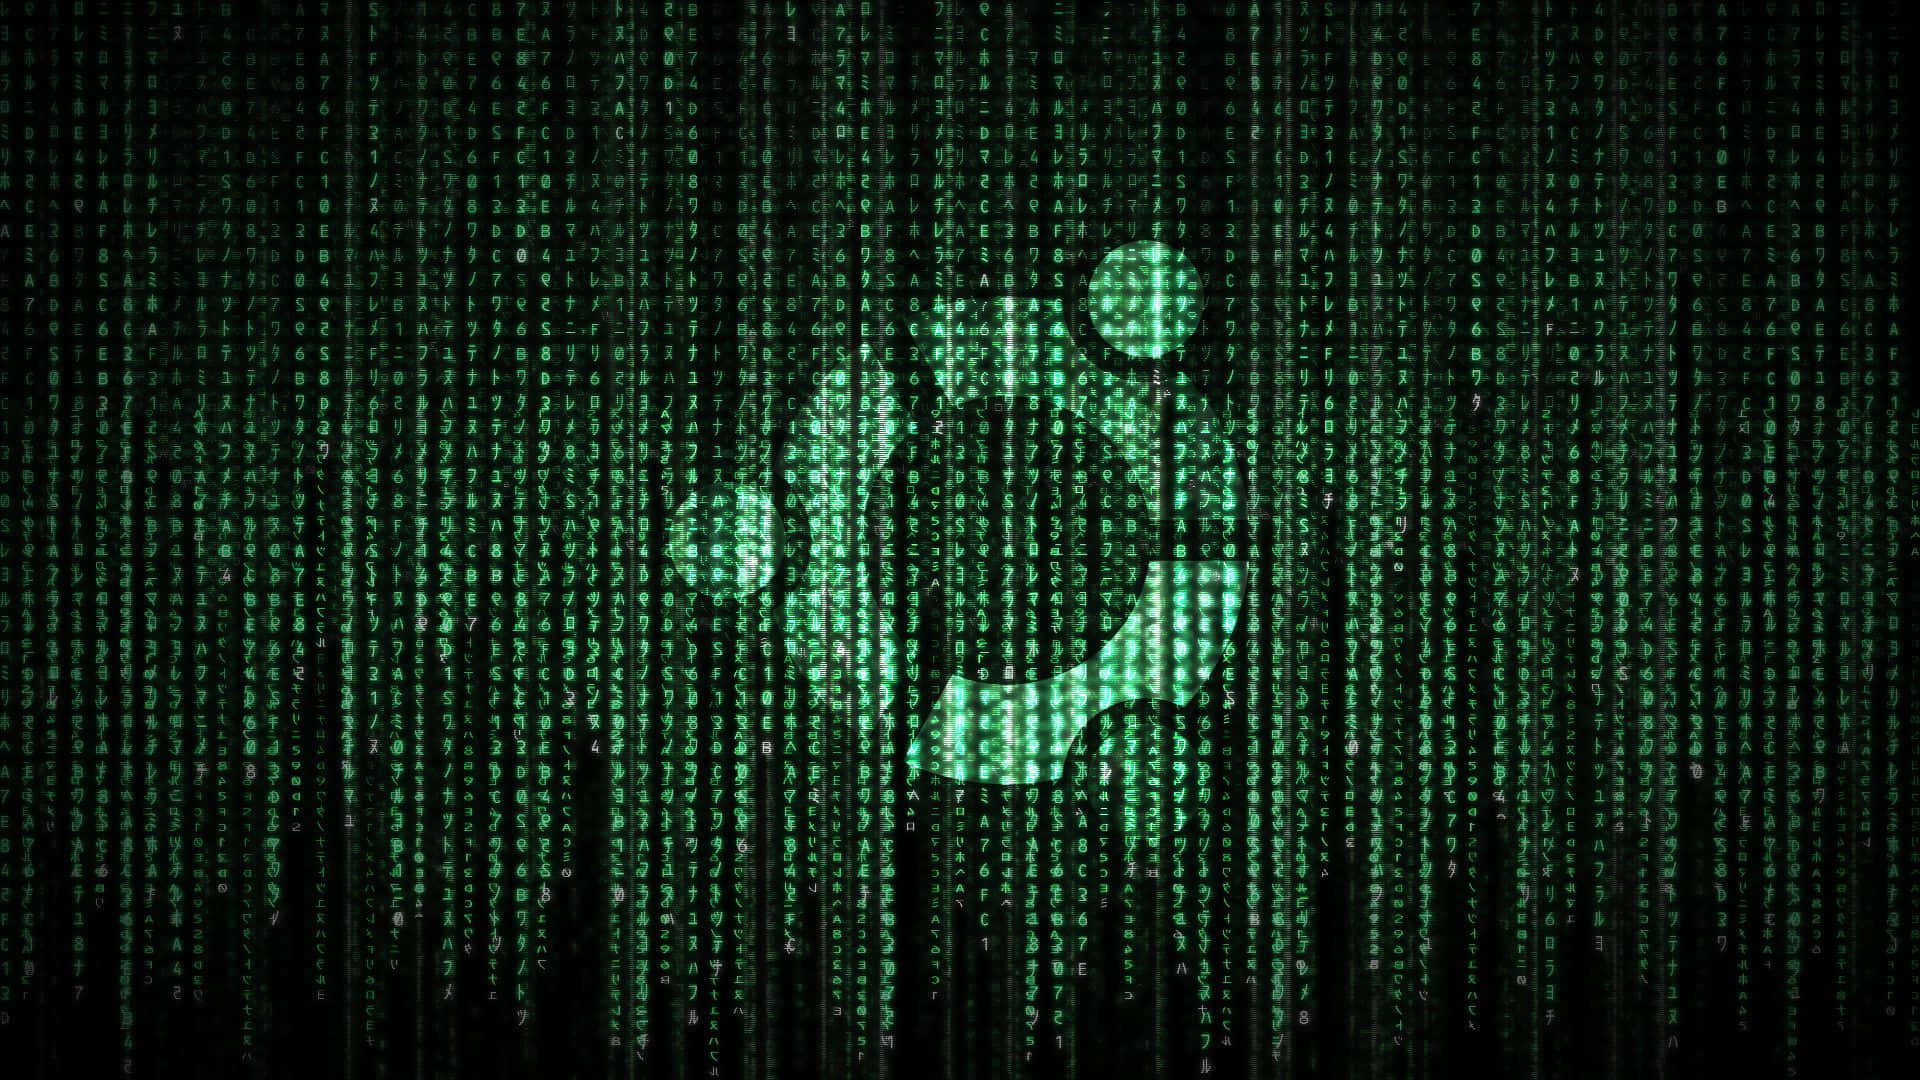 Enter the digital world of the Matrix